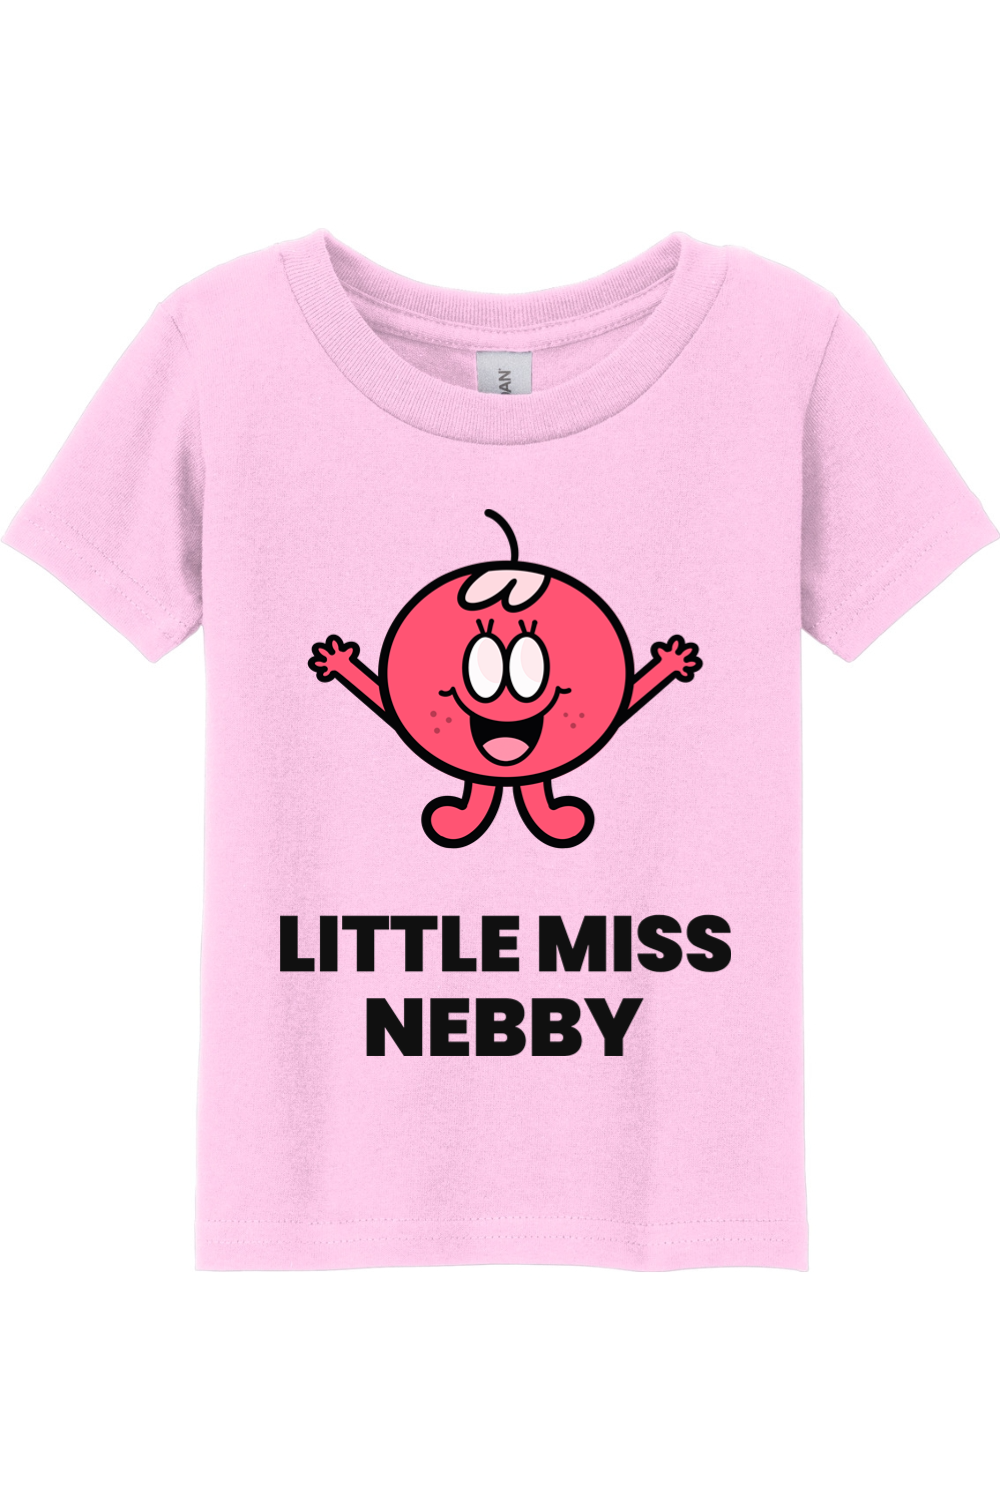 Little Miss Nebby - Toddler T-Shirt - Yinzylvania